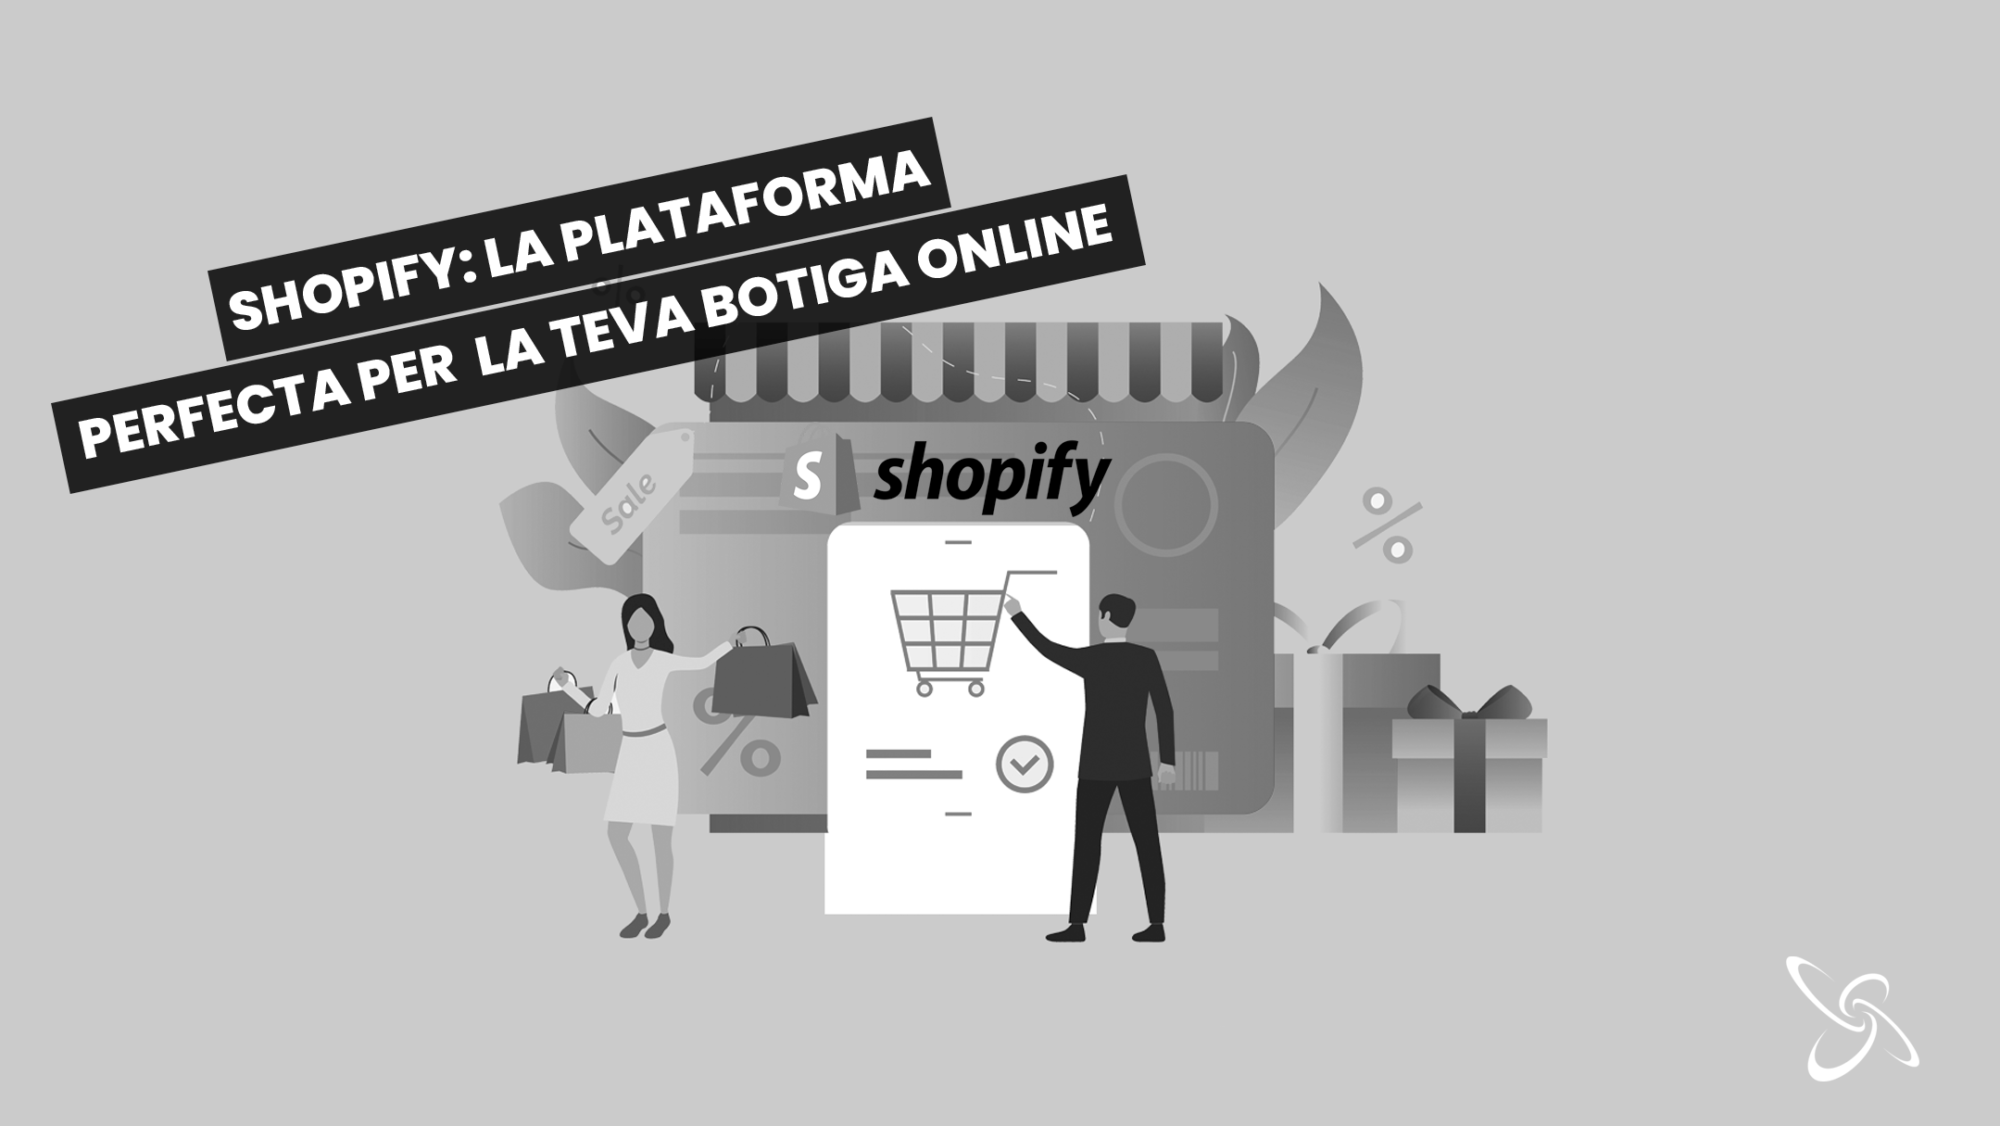 Shopify: La plataforma perfecta